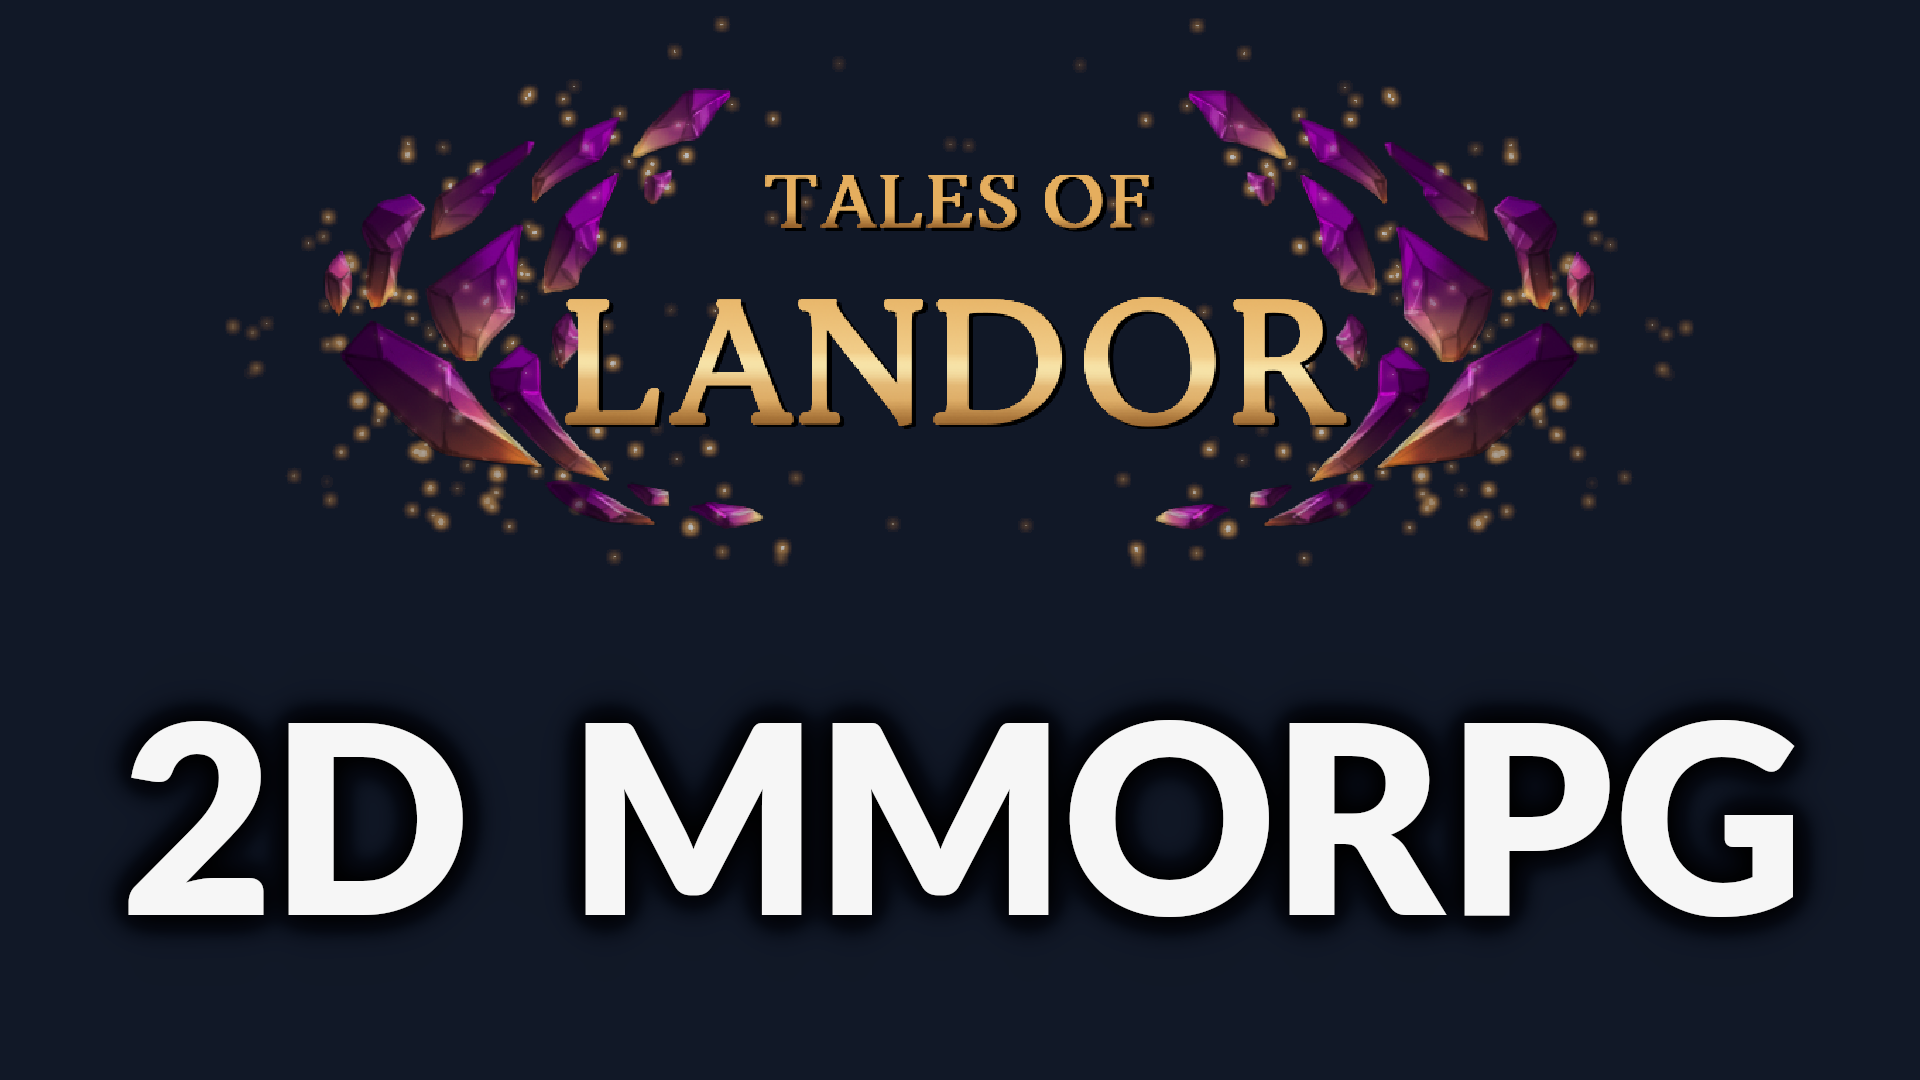 Tales of Landor - 2D MMORPG